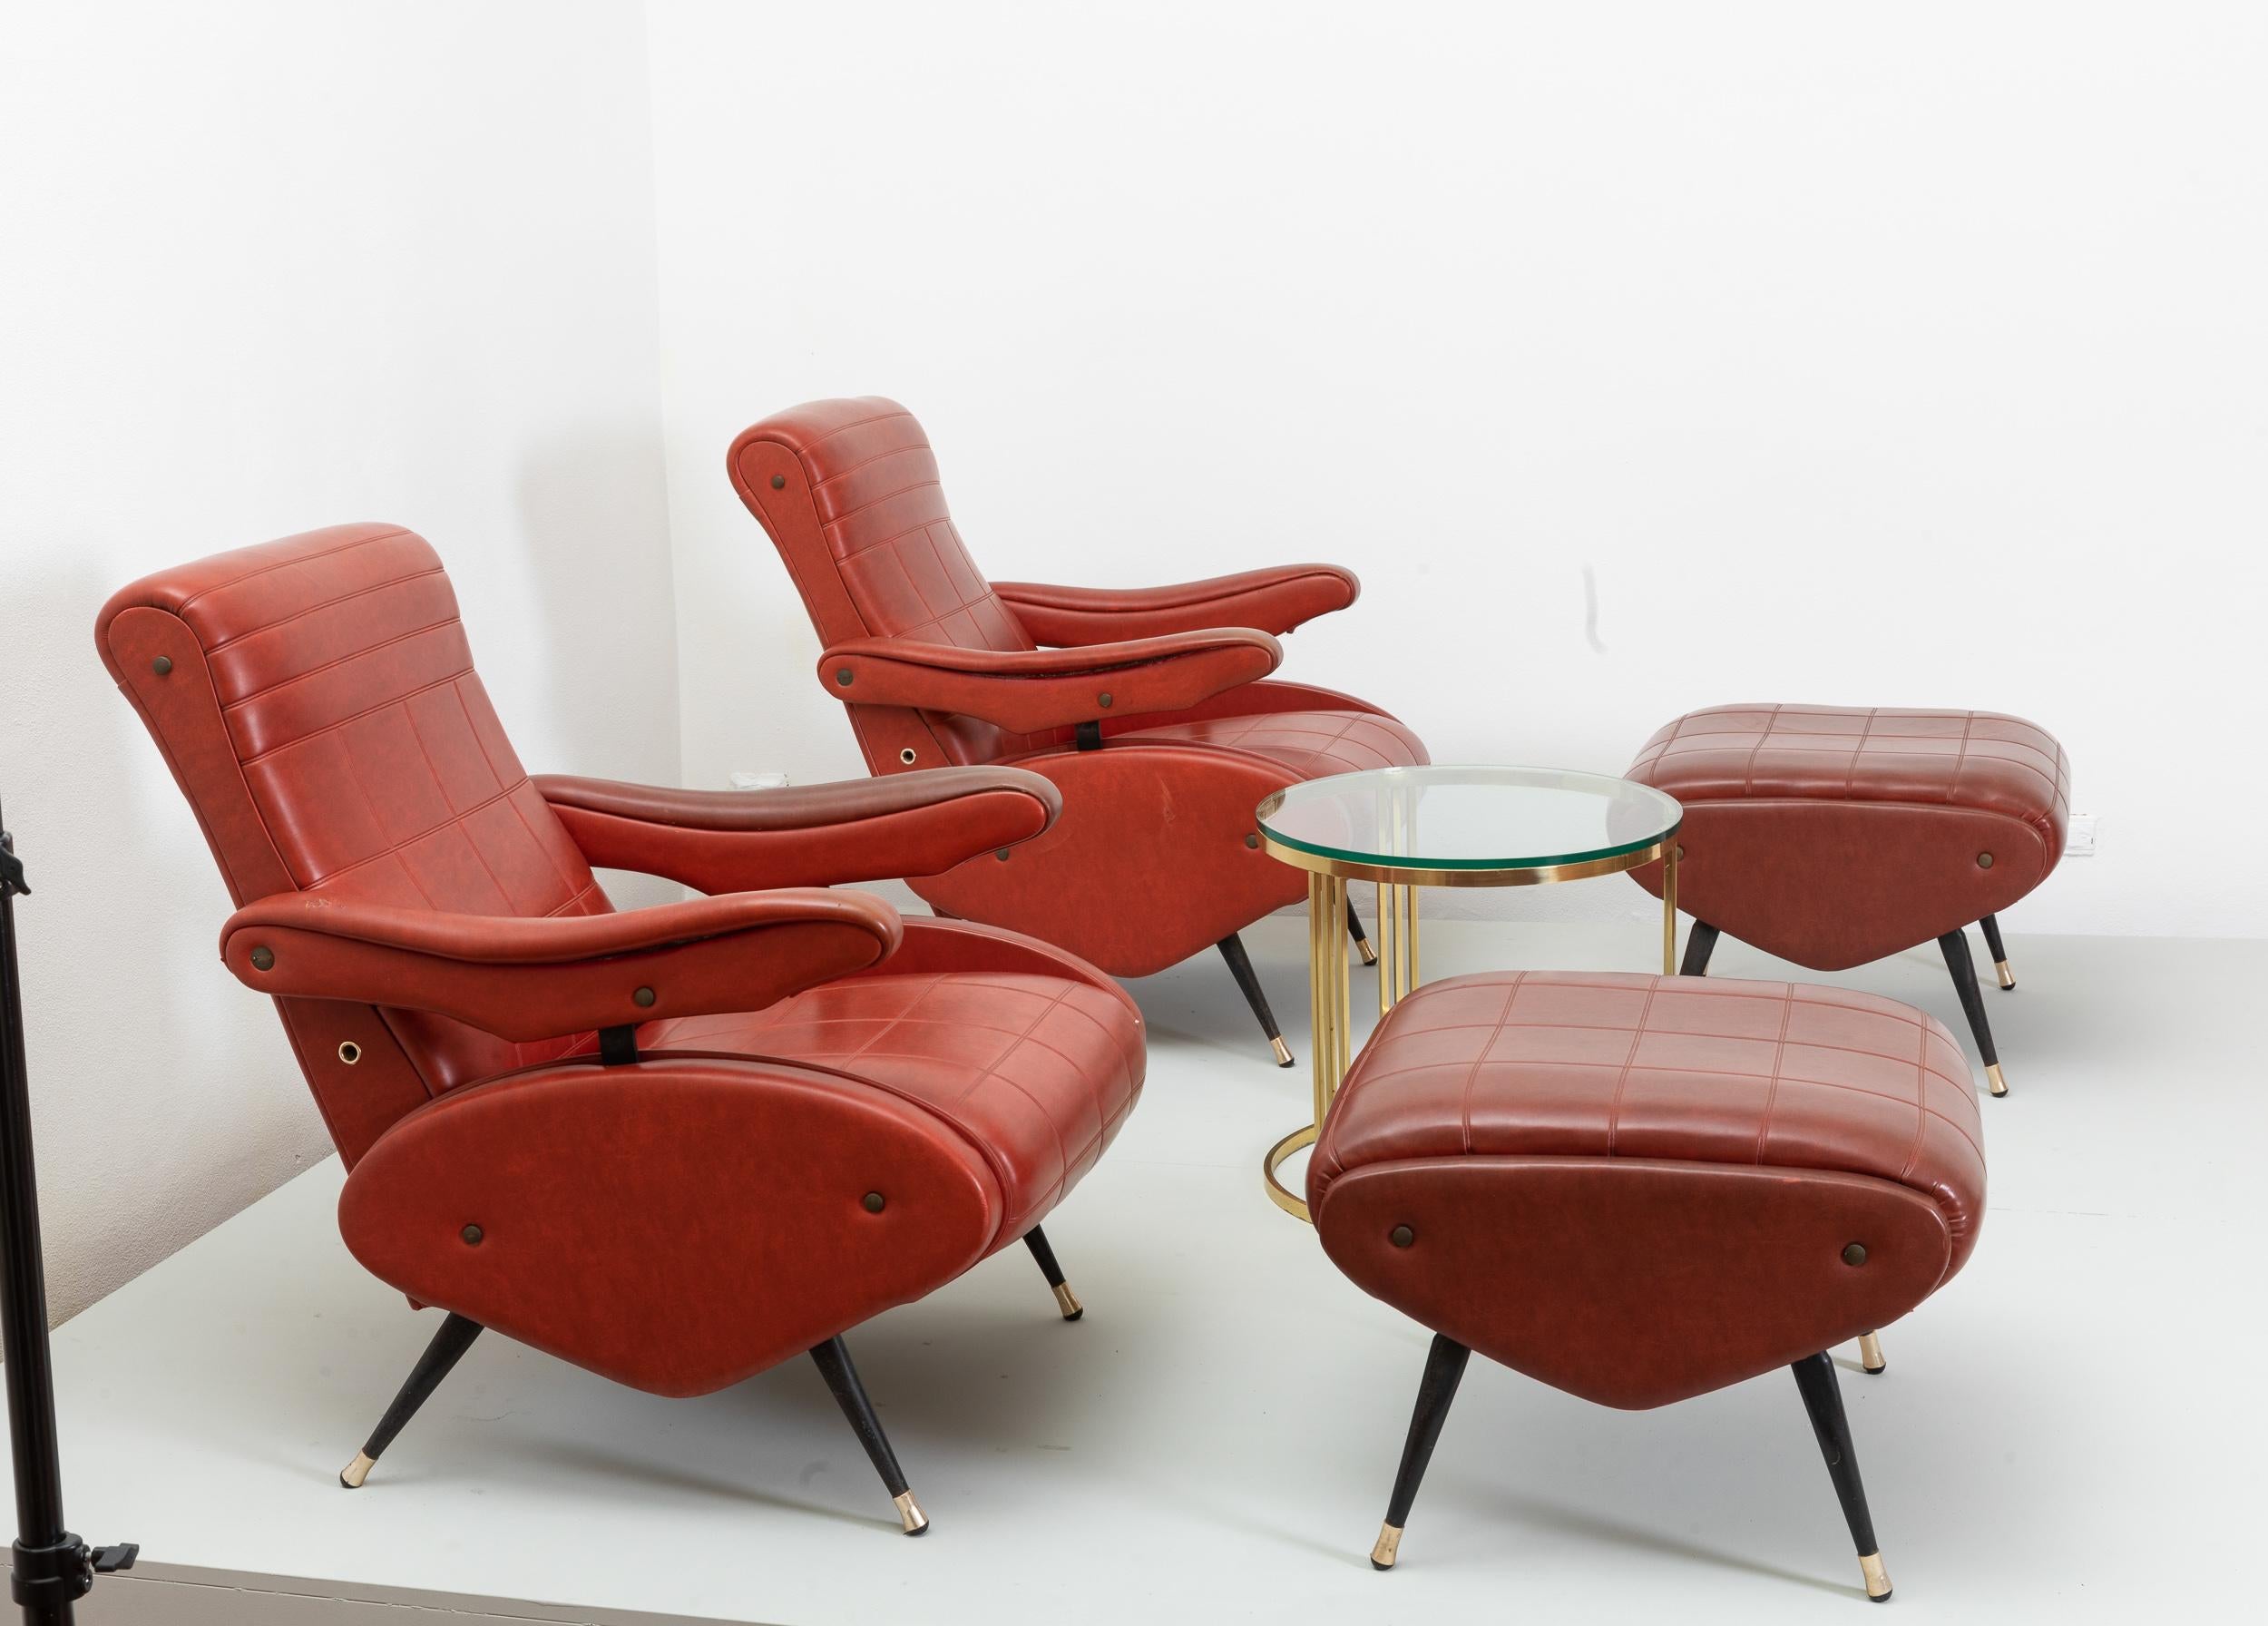 Nello Pini Prod. Novarredo c. 1950-1960 Two reclining armchairs and two pouffs 5